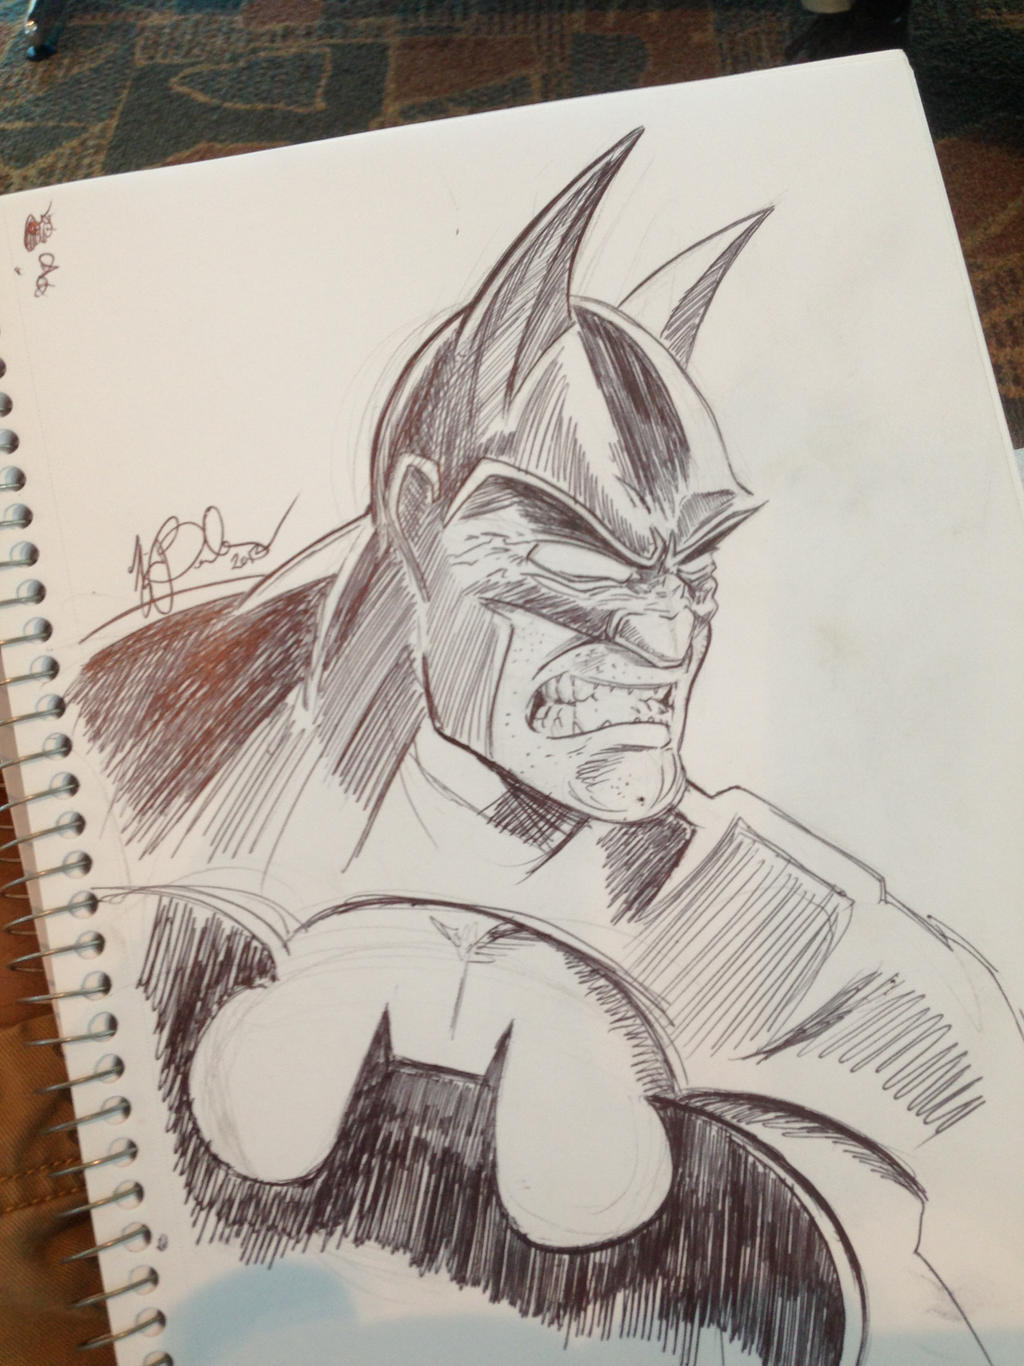 SDCC - The Batman Sketch